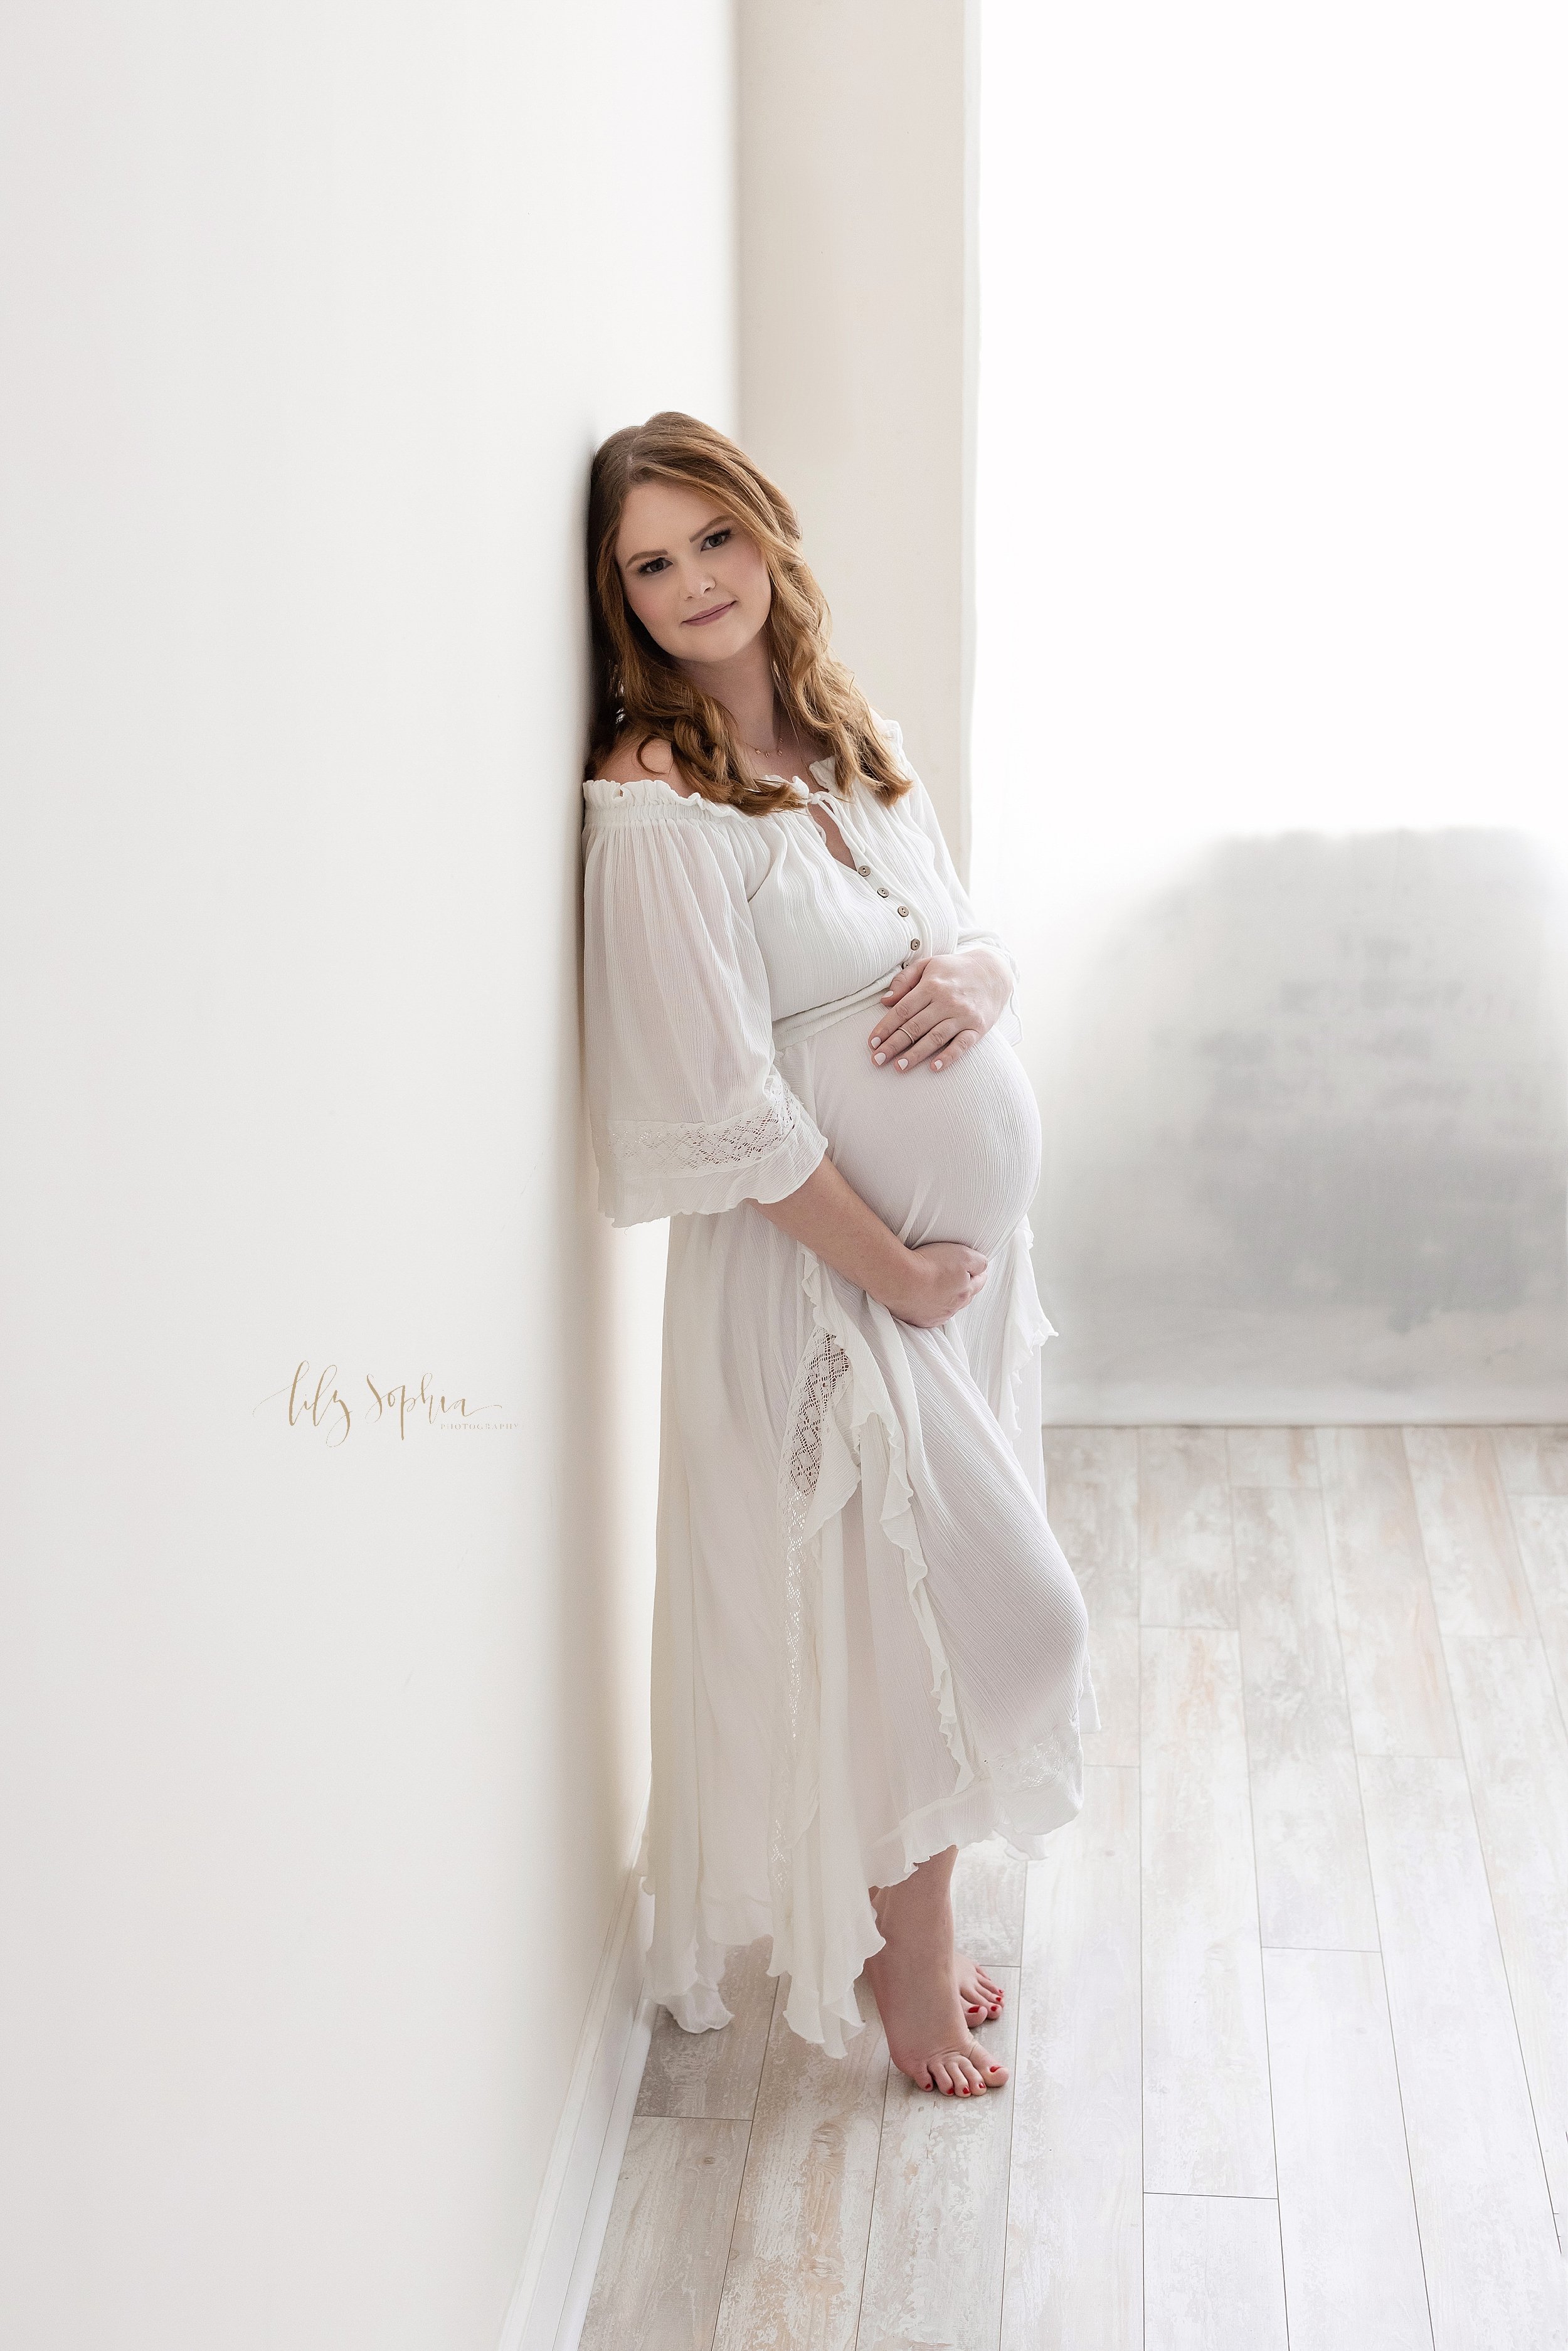 intown-atlanta-grant-park-kirkwood-chamblee-maternity-studio-photographer-baby-boy-pregnancy_1475.jpg